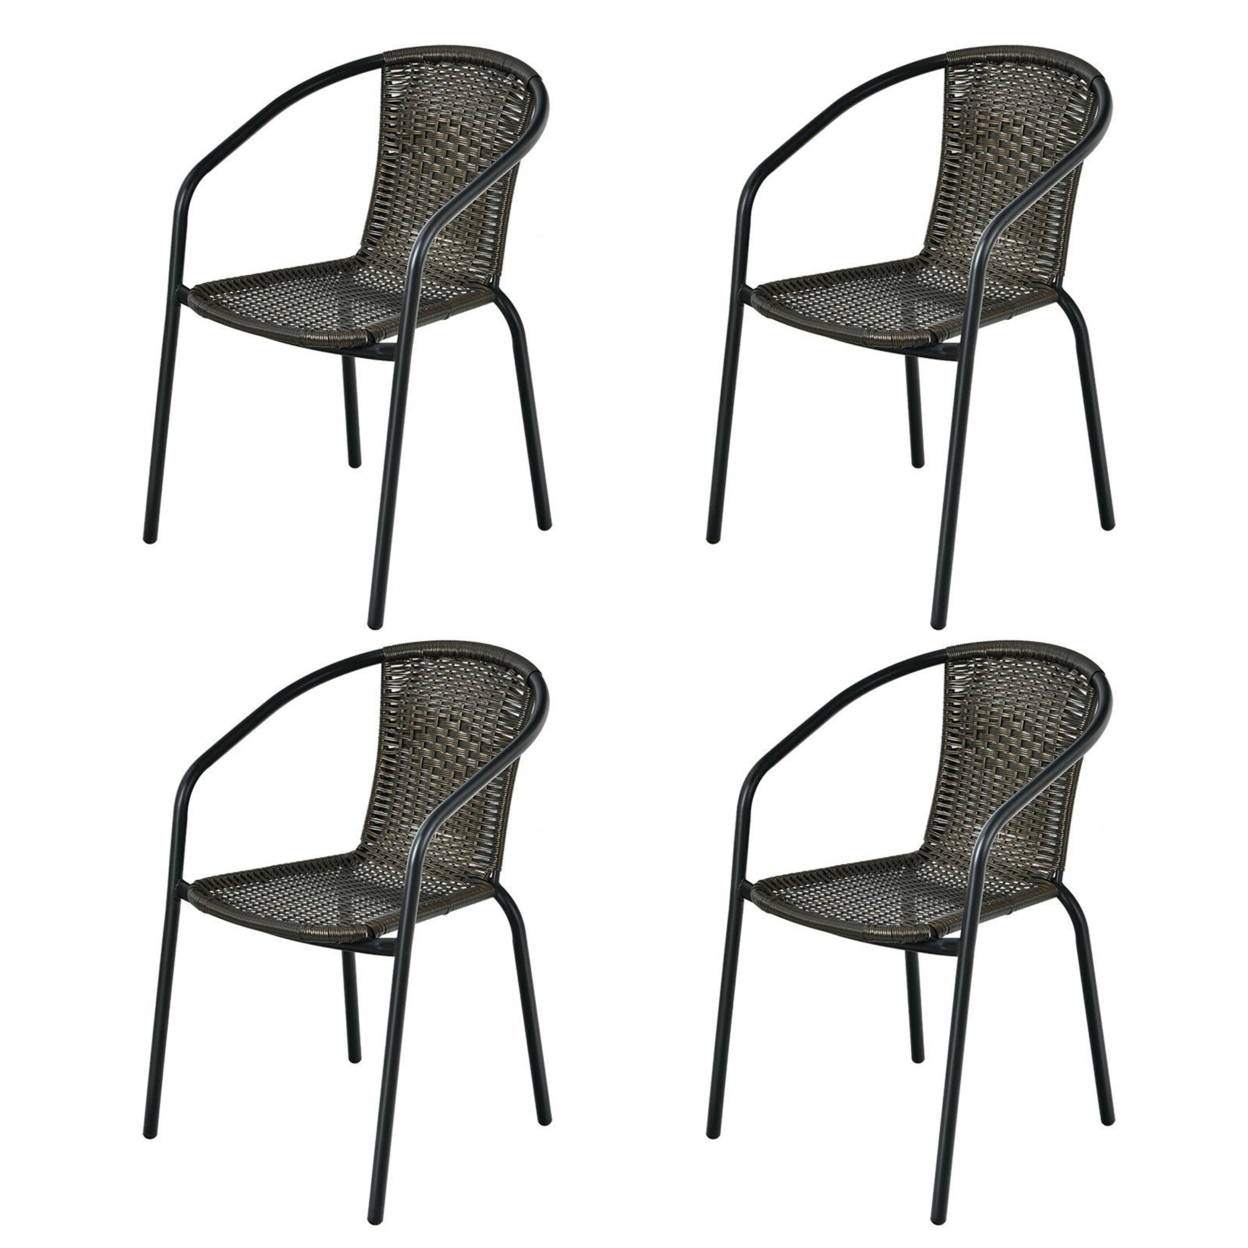 Gymax Patio Rattan Dining Chair Outdoor Stackable Armchair Yard Garden - Black, 8 Pcs